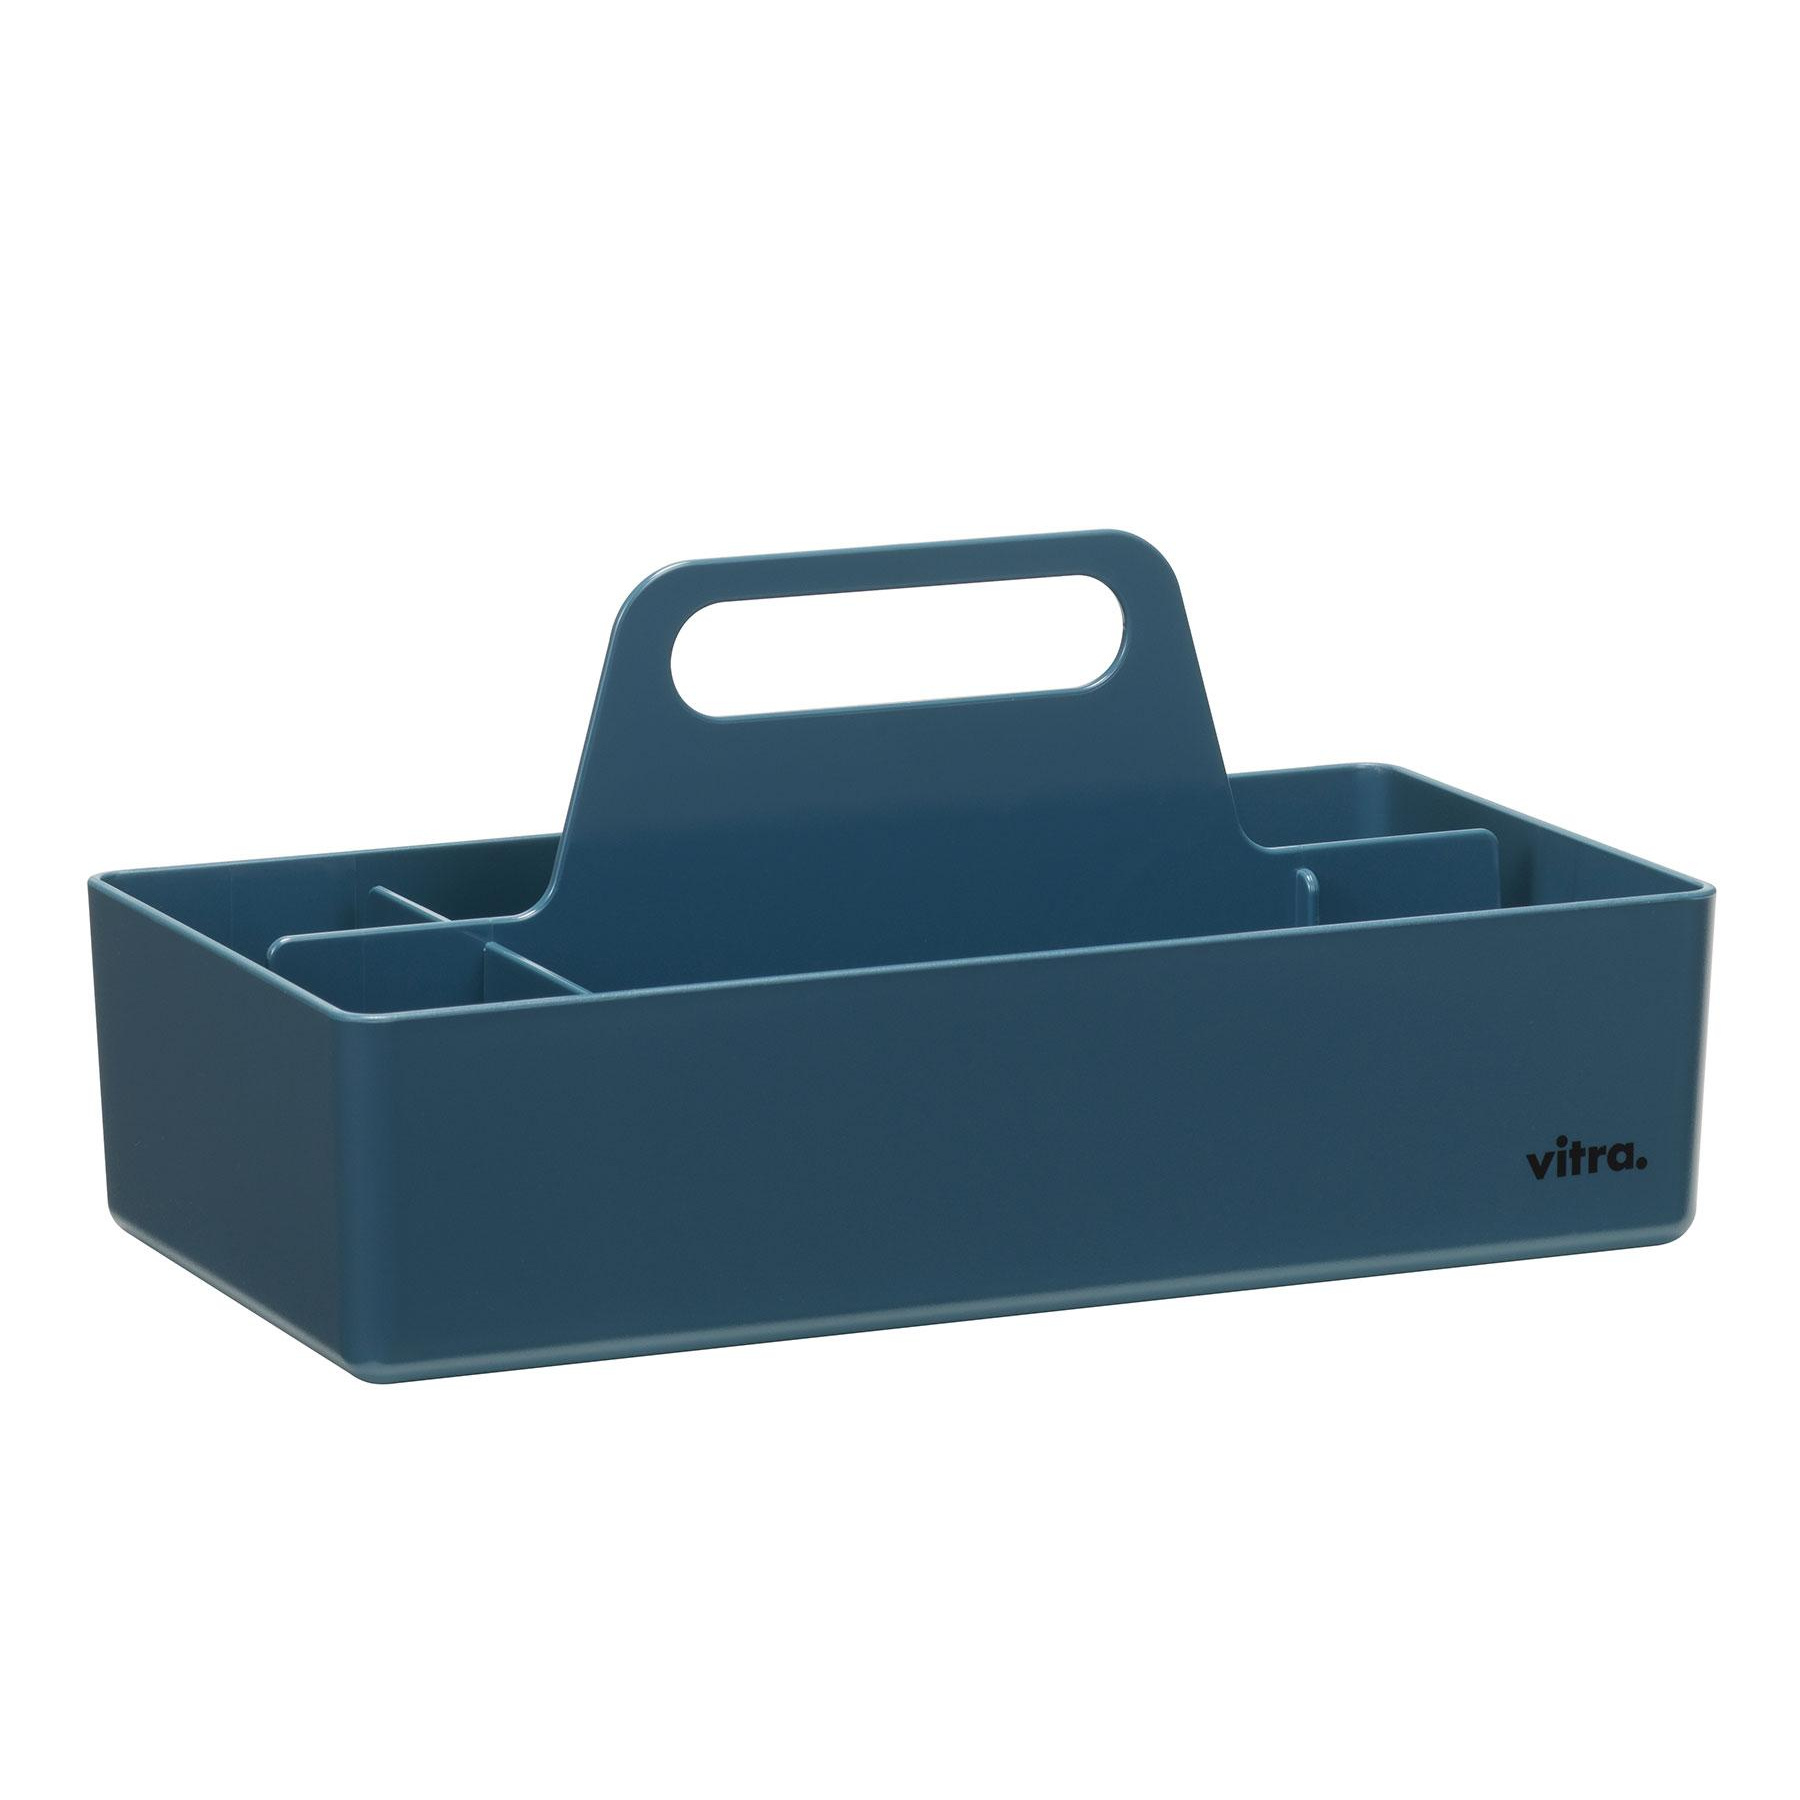 Vitra - Toolbox RE Aufbewahrungsbox - meerblau/recyceltes ABS/LxBxH 32,7x16,7x15,6cm von Vitra